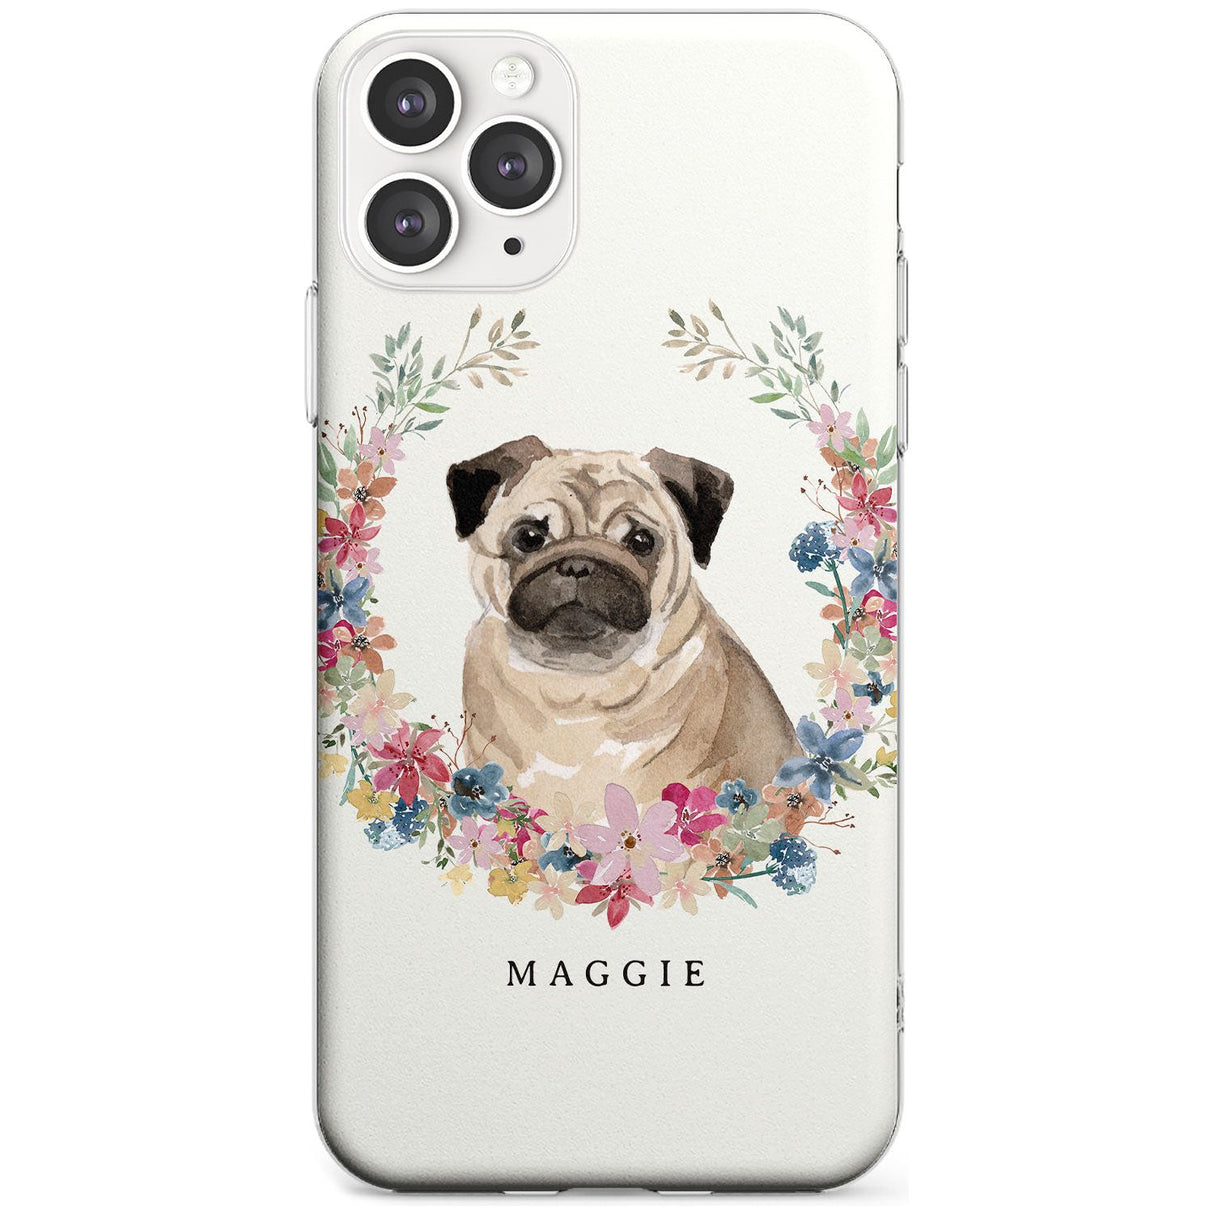 Pug - Watercolour Dog Portrait Slim TPU Phone Case for iPhone 11 Pro Max